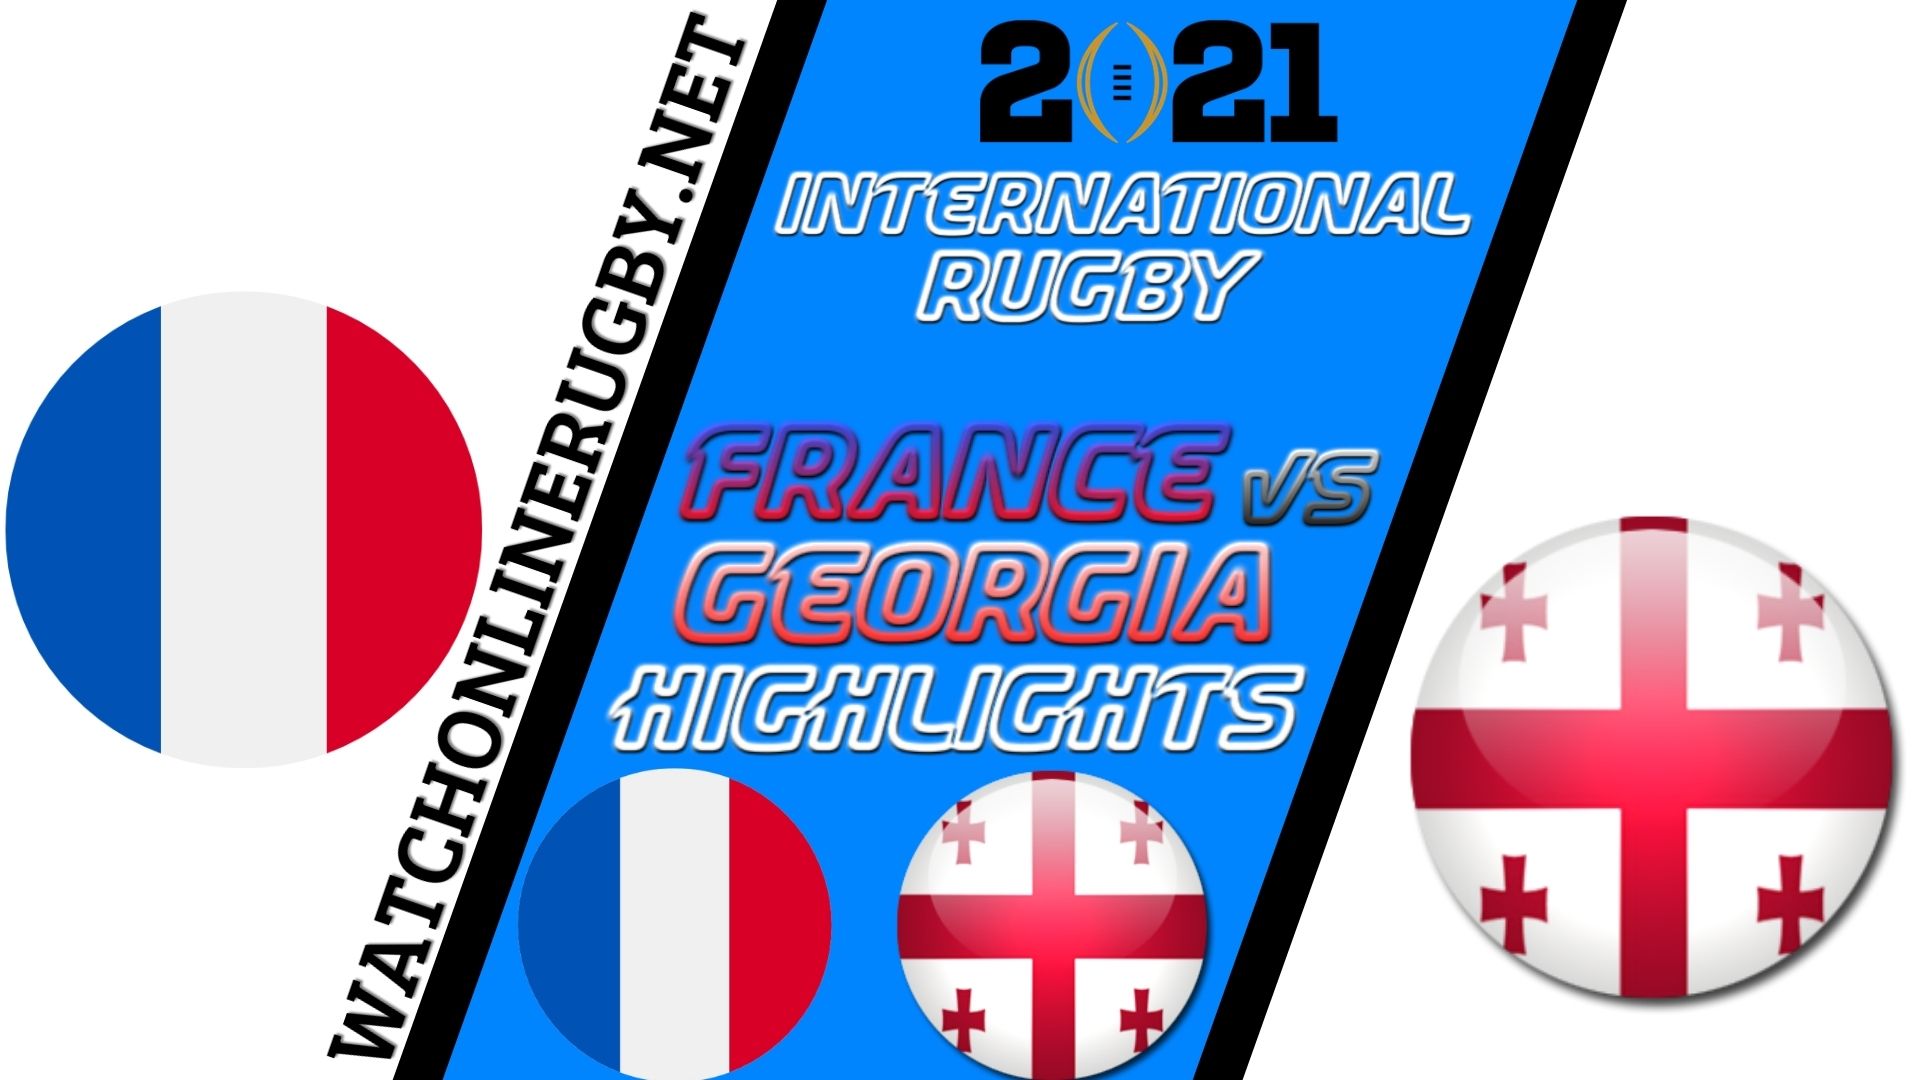 France Vs Georgia International Rugby 2021